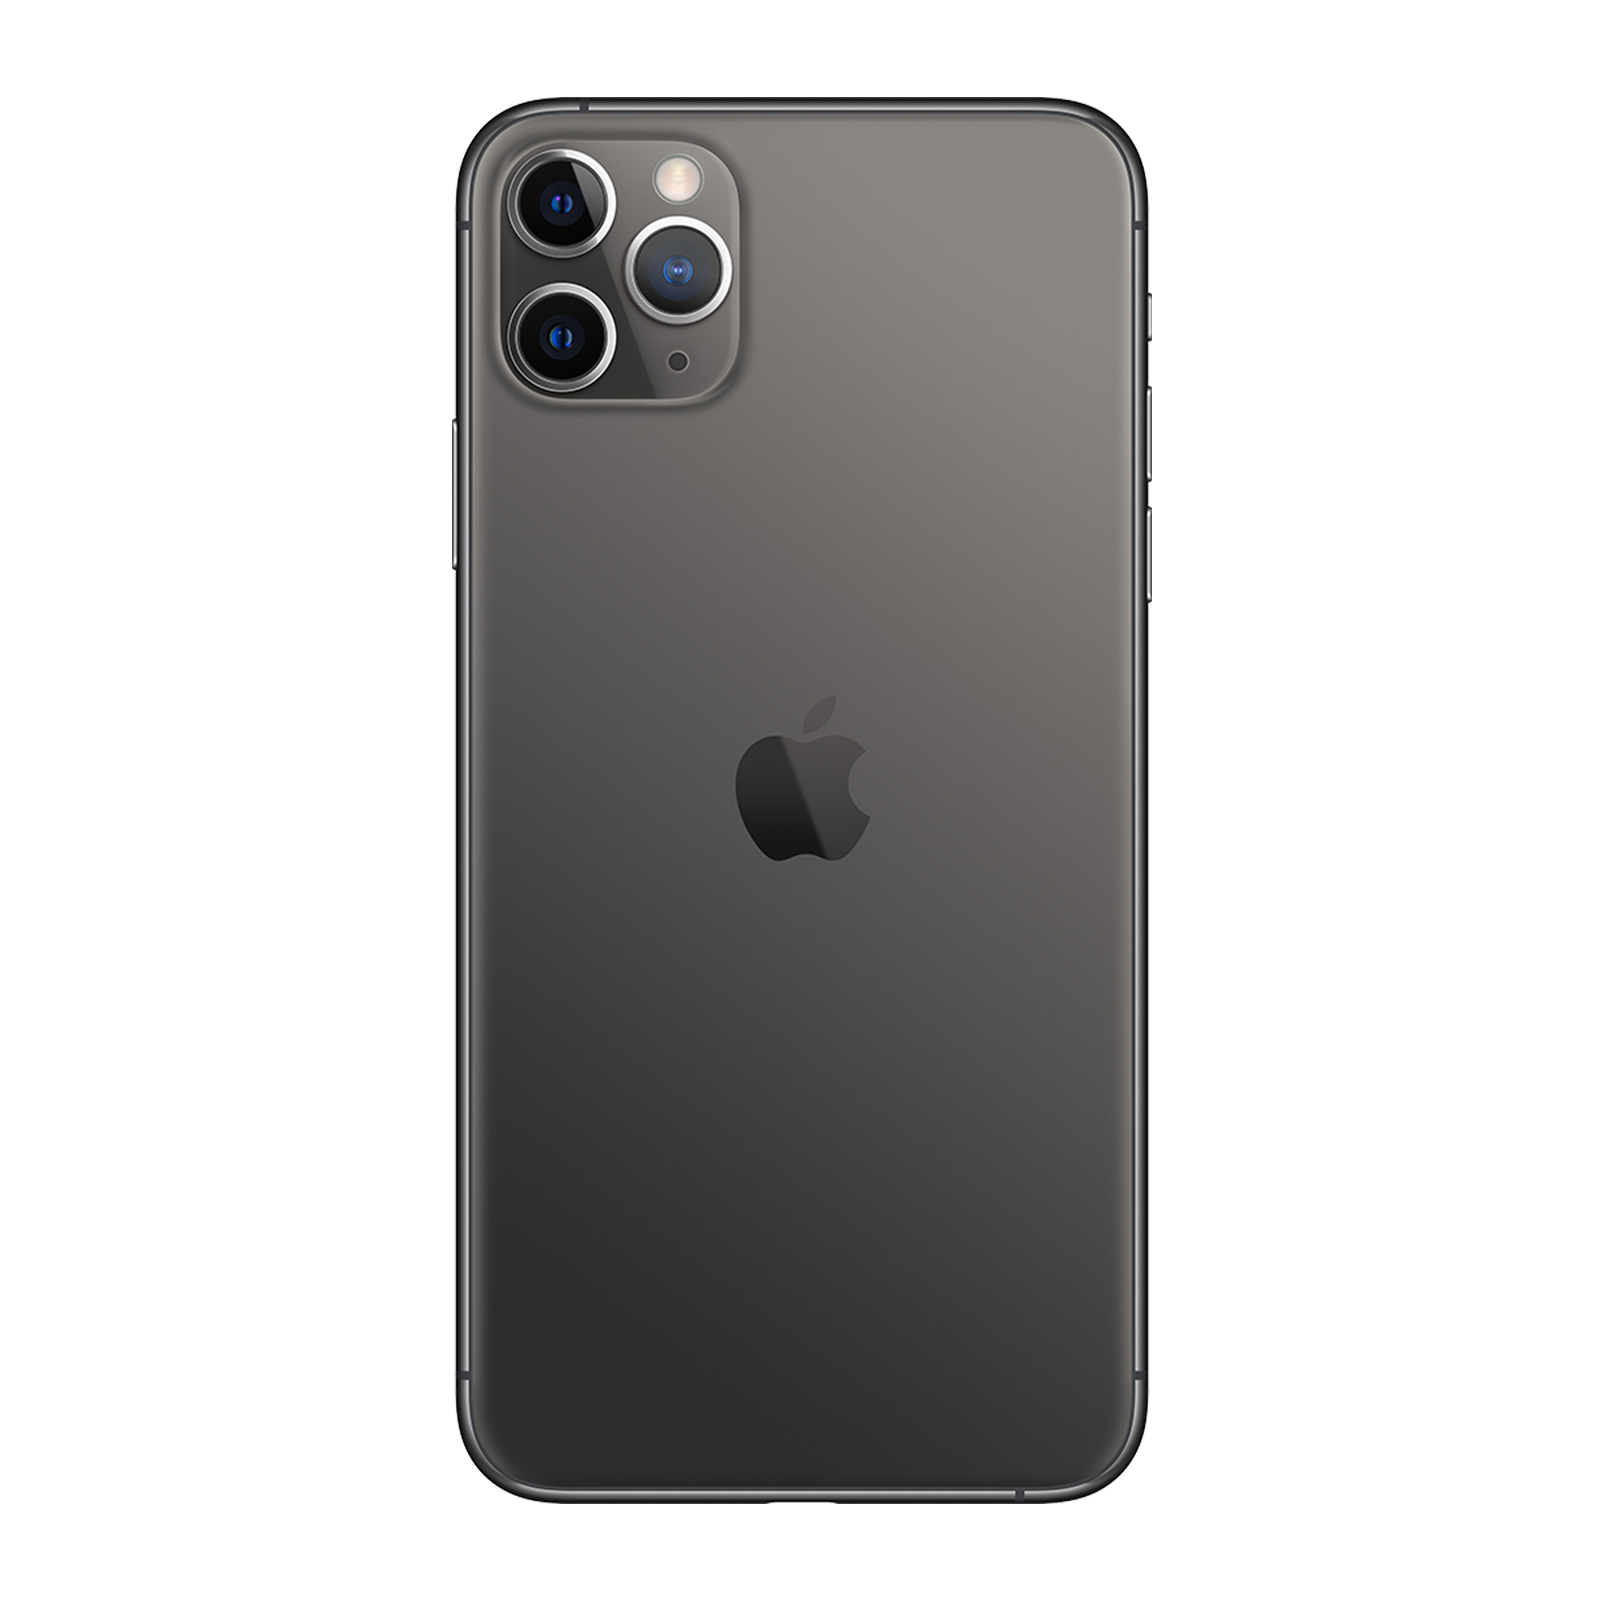 iPhone 11 Pro 512GB Space Grey Fair - Unlocked